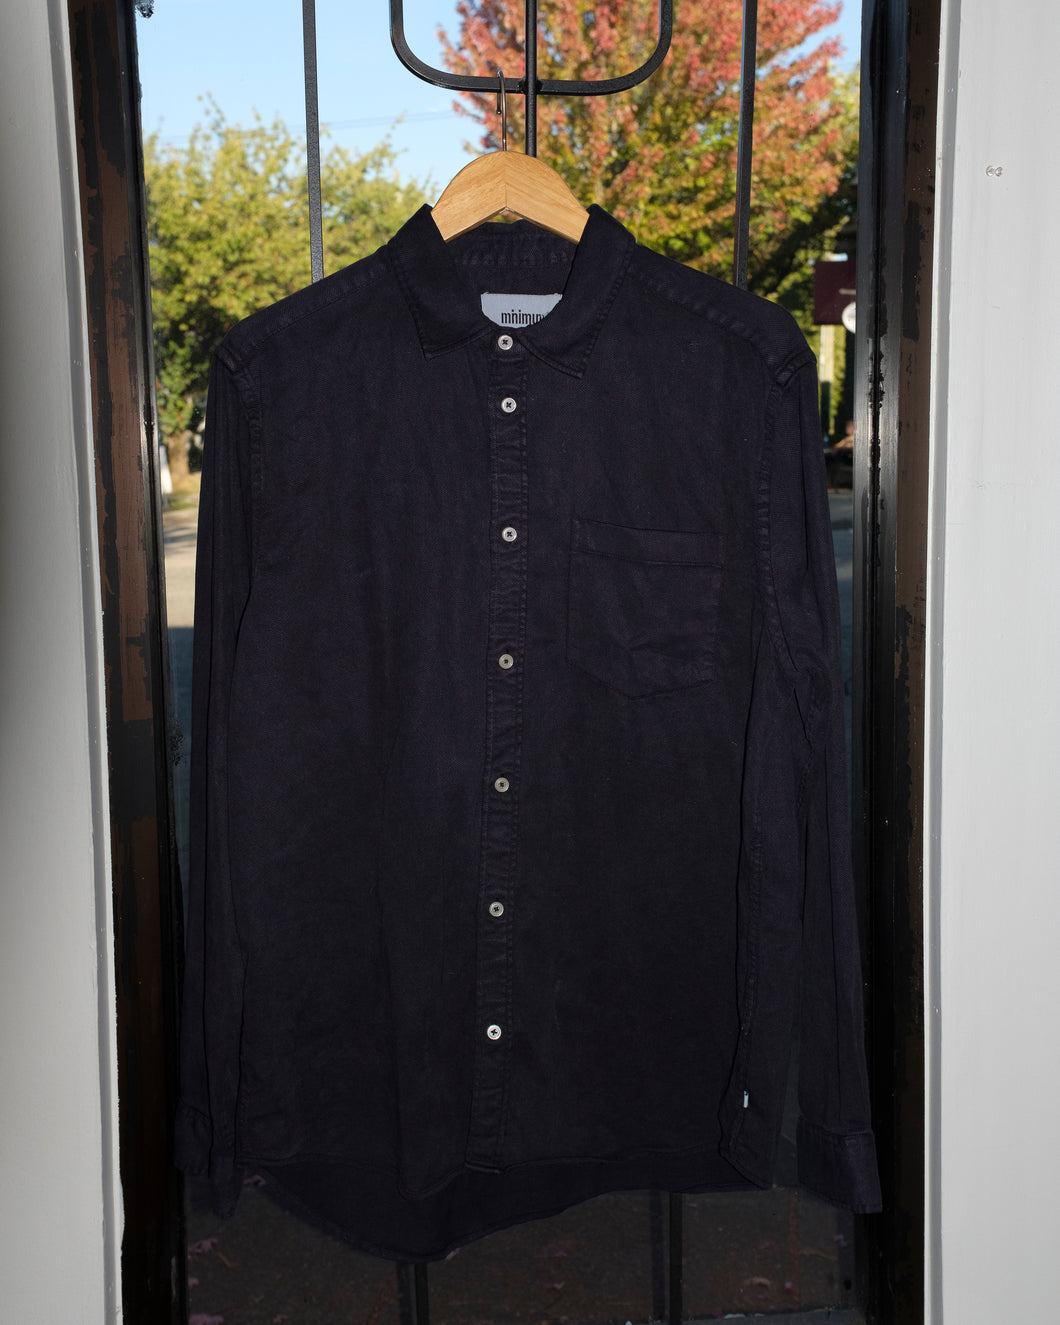 Minimum - Jack Long Sleeve Shirt - Black - flat front